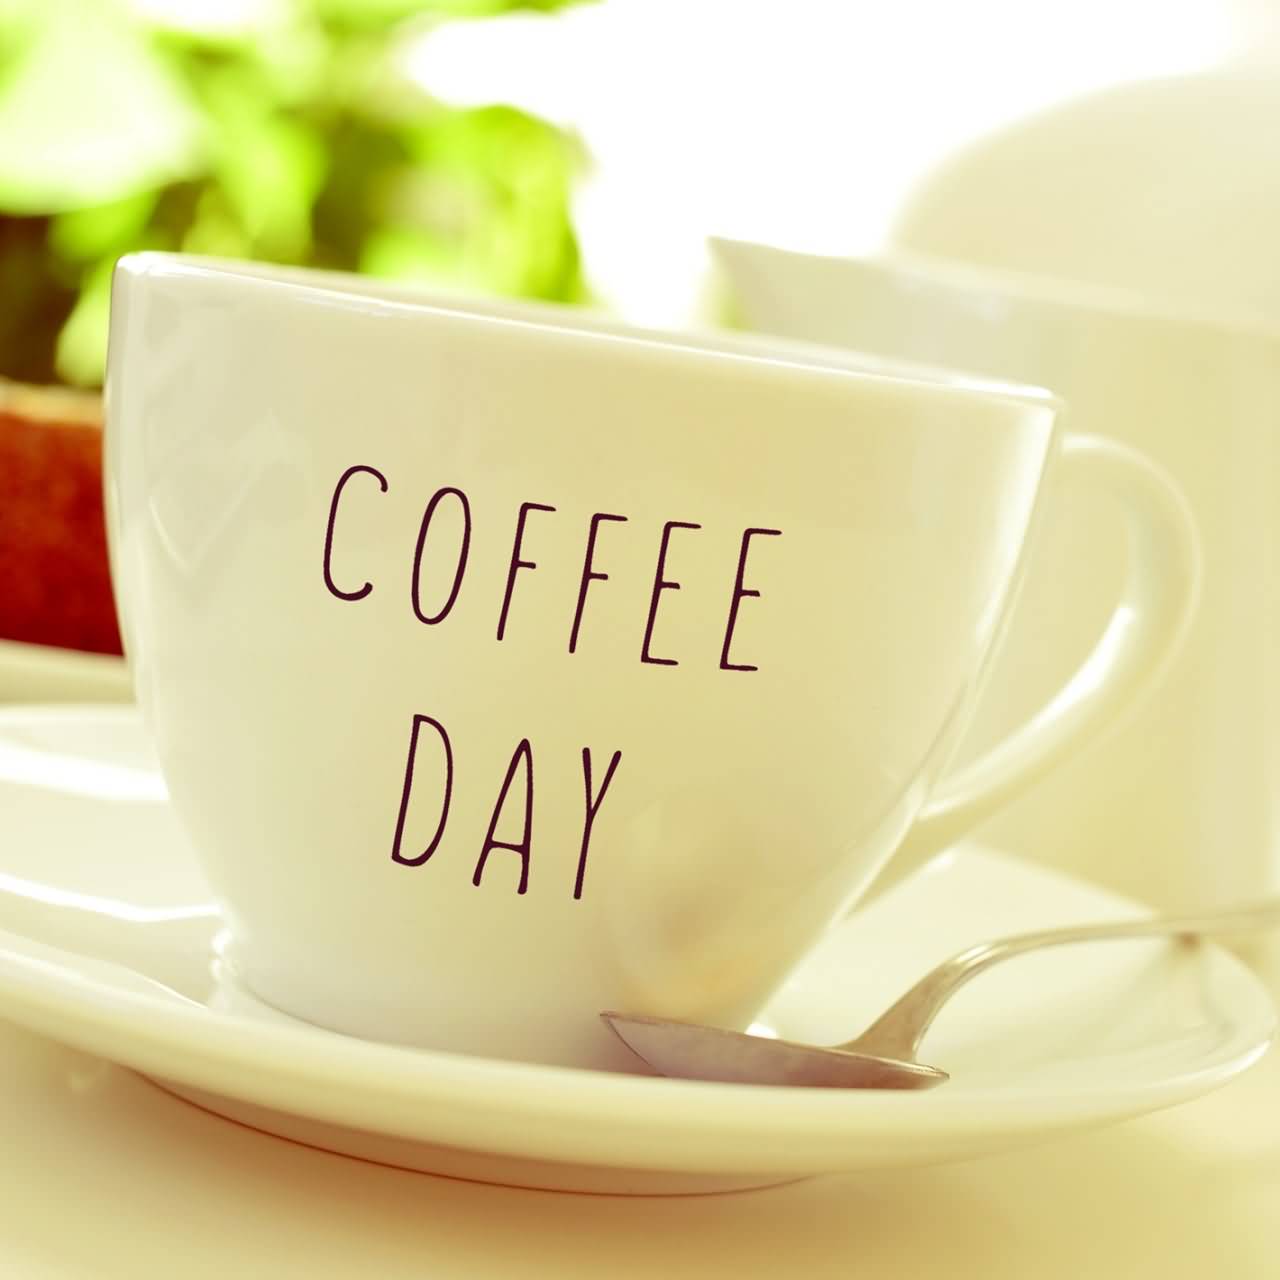 50 Best International Coffee Day 2017 Wishes Ideas On Askideas